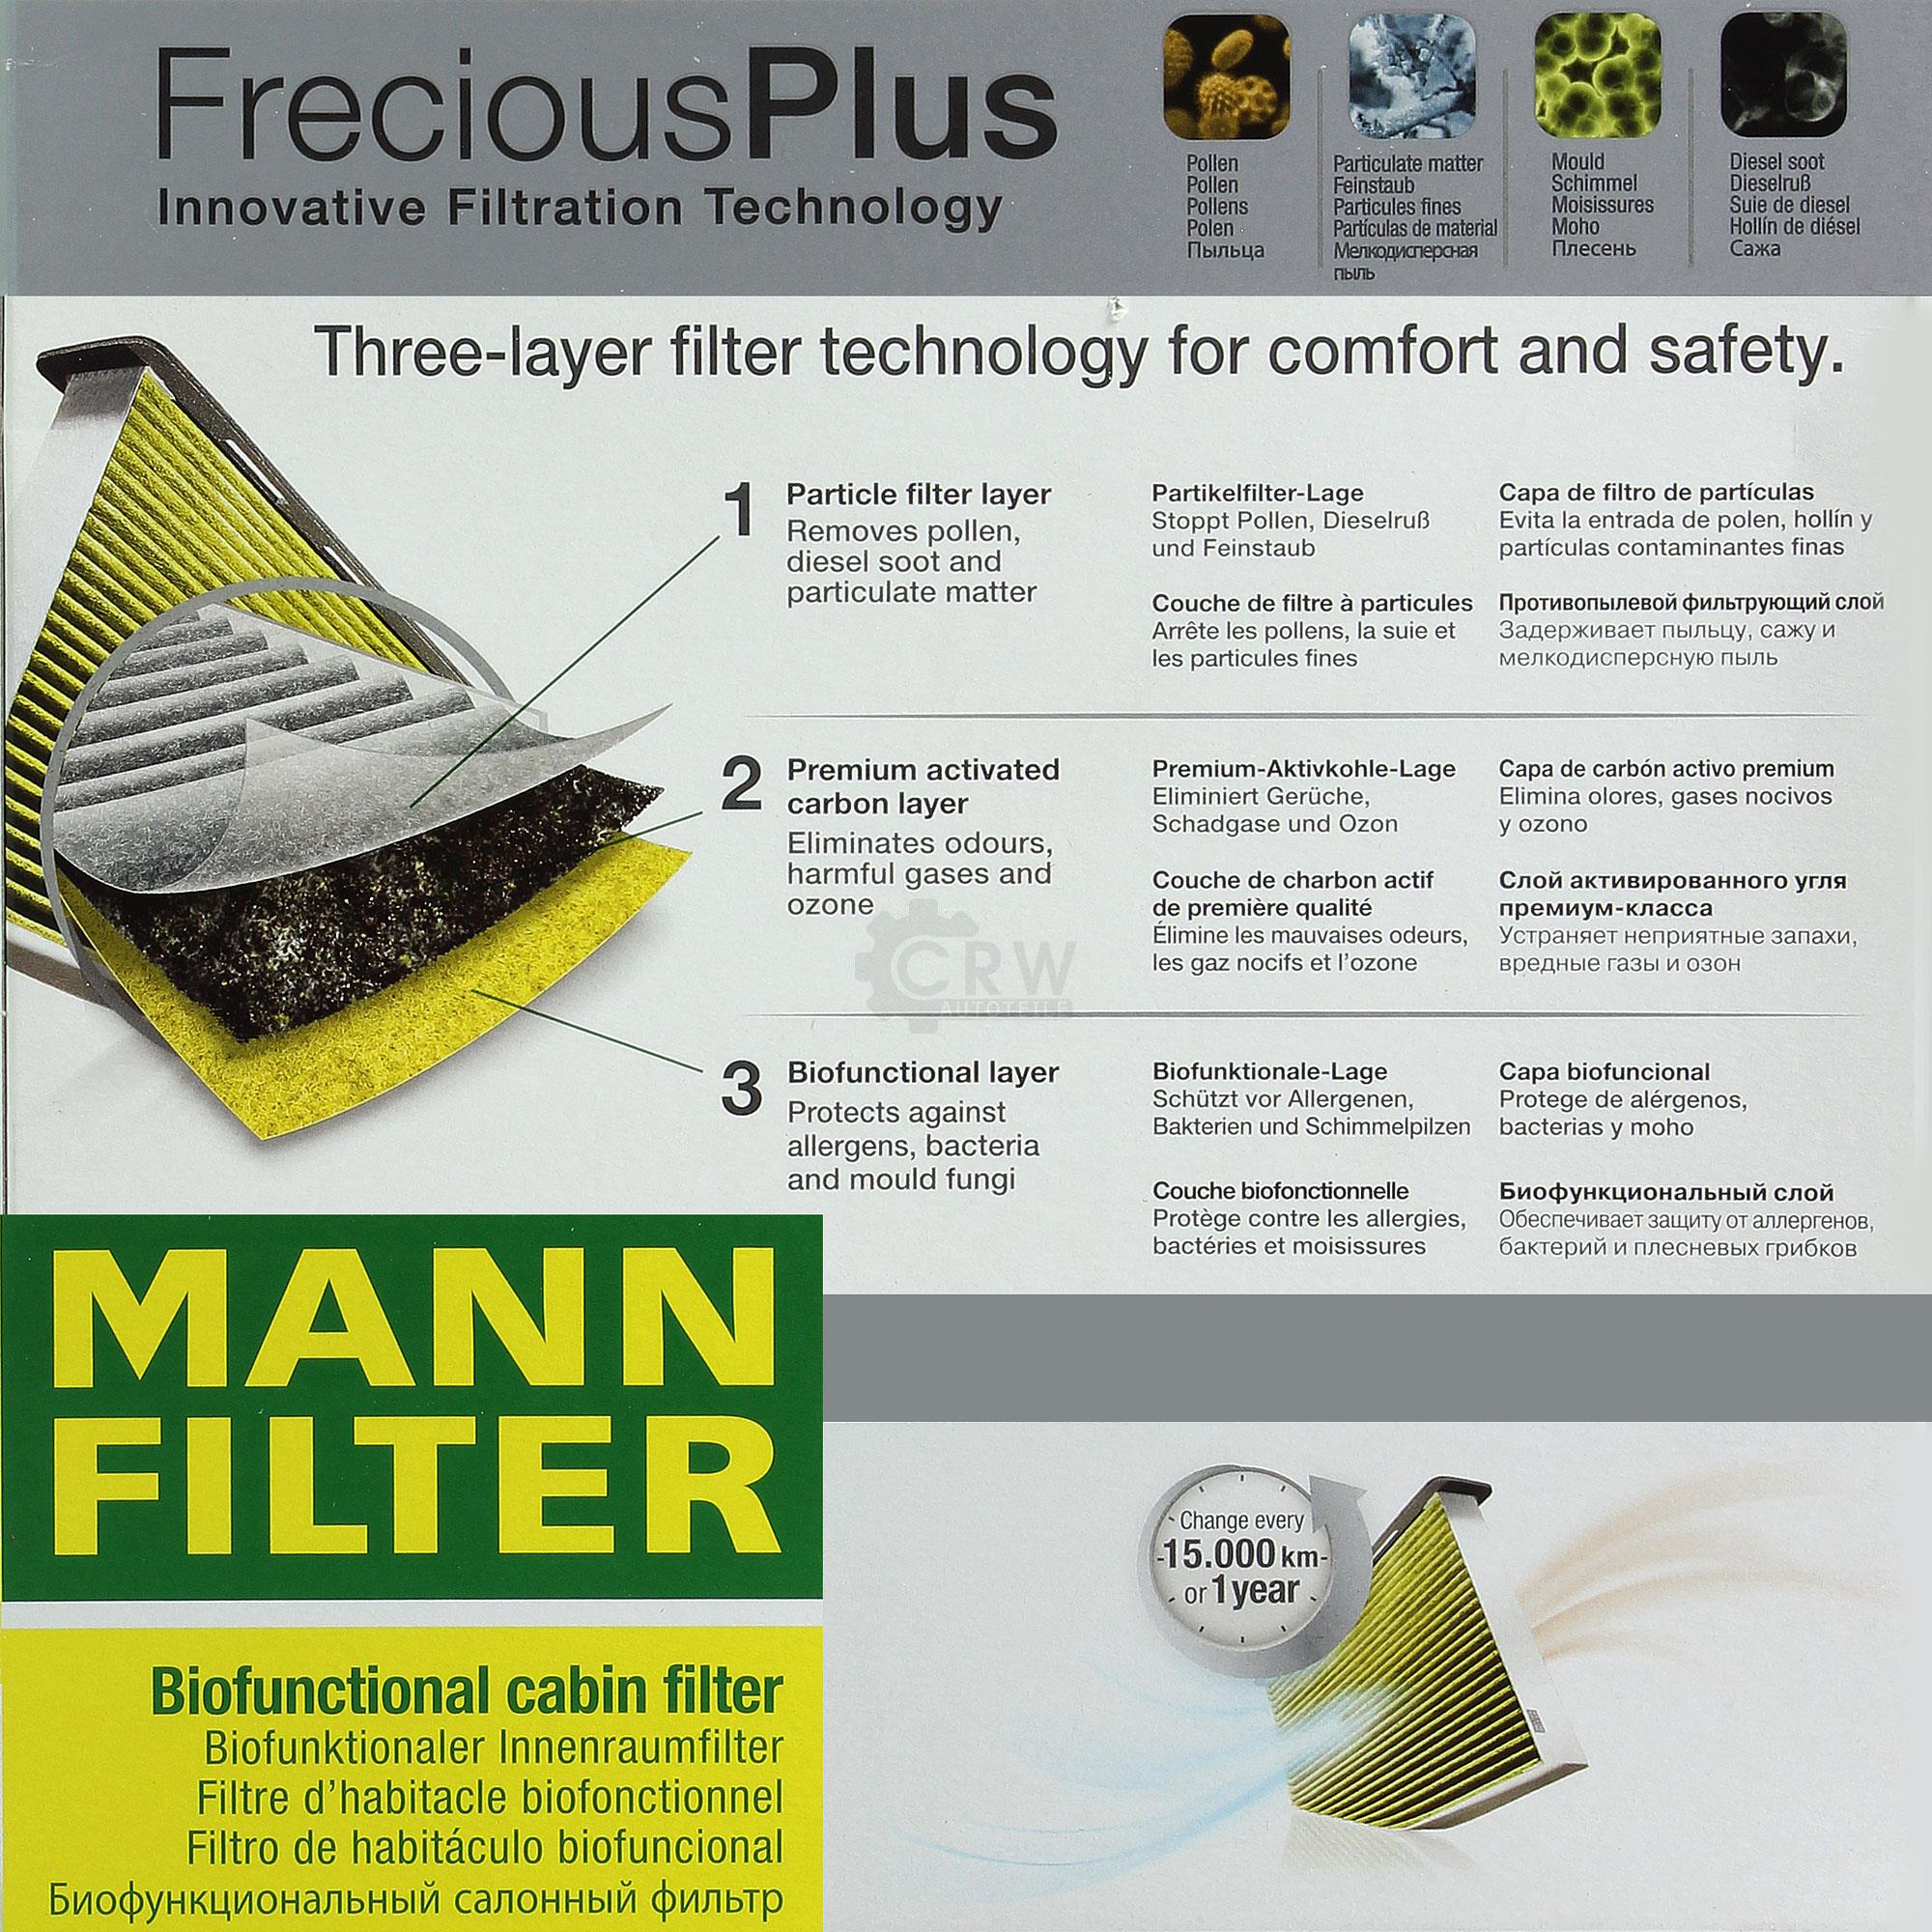 MANN-Filter Innenraumfilter Biofunctional für Allergiker FP 2026